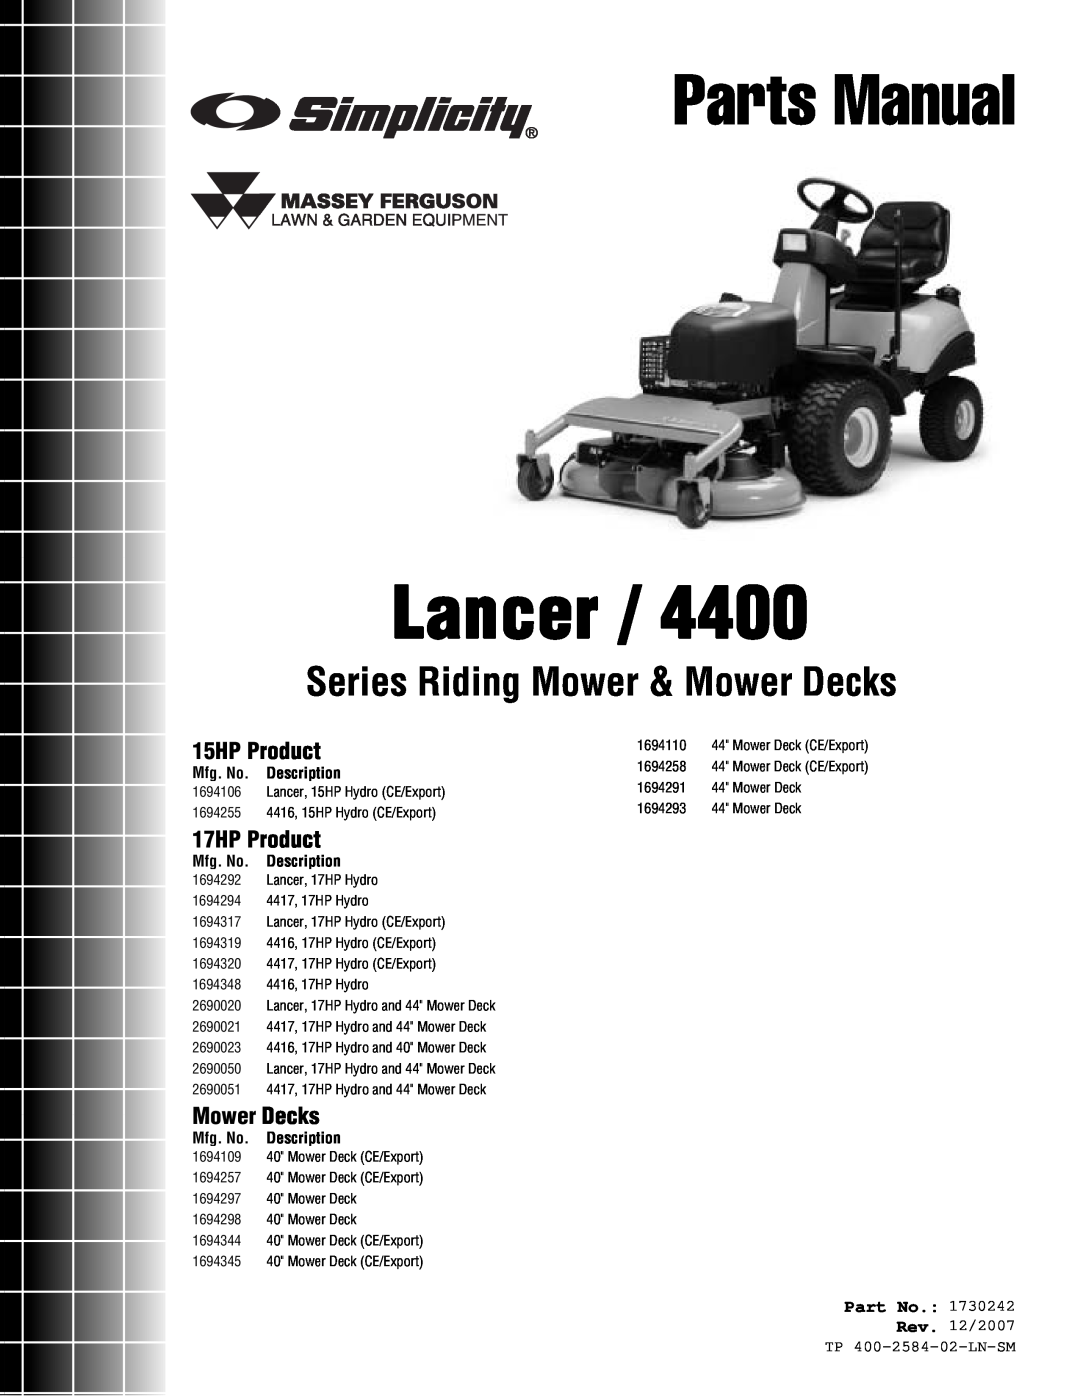 Simplicity Lancer / 4400 manual 15HP Product, 17HP Product, Mower Decks, Mfg. No. Description, Parts Manual 